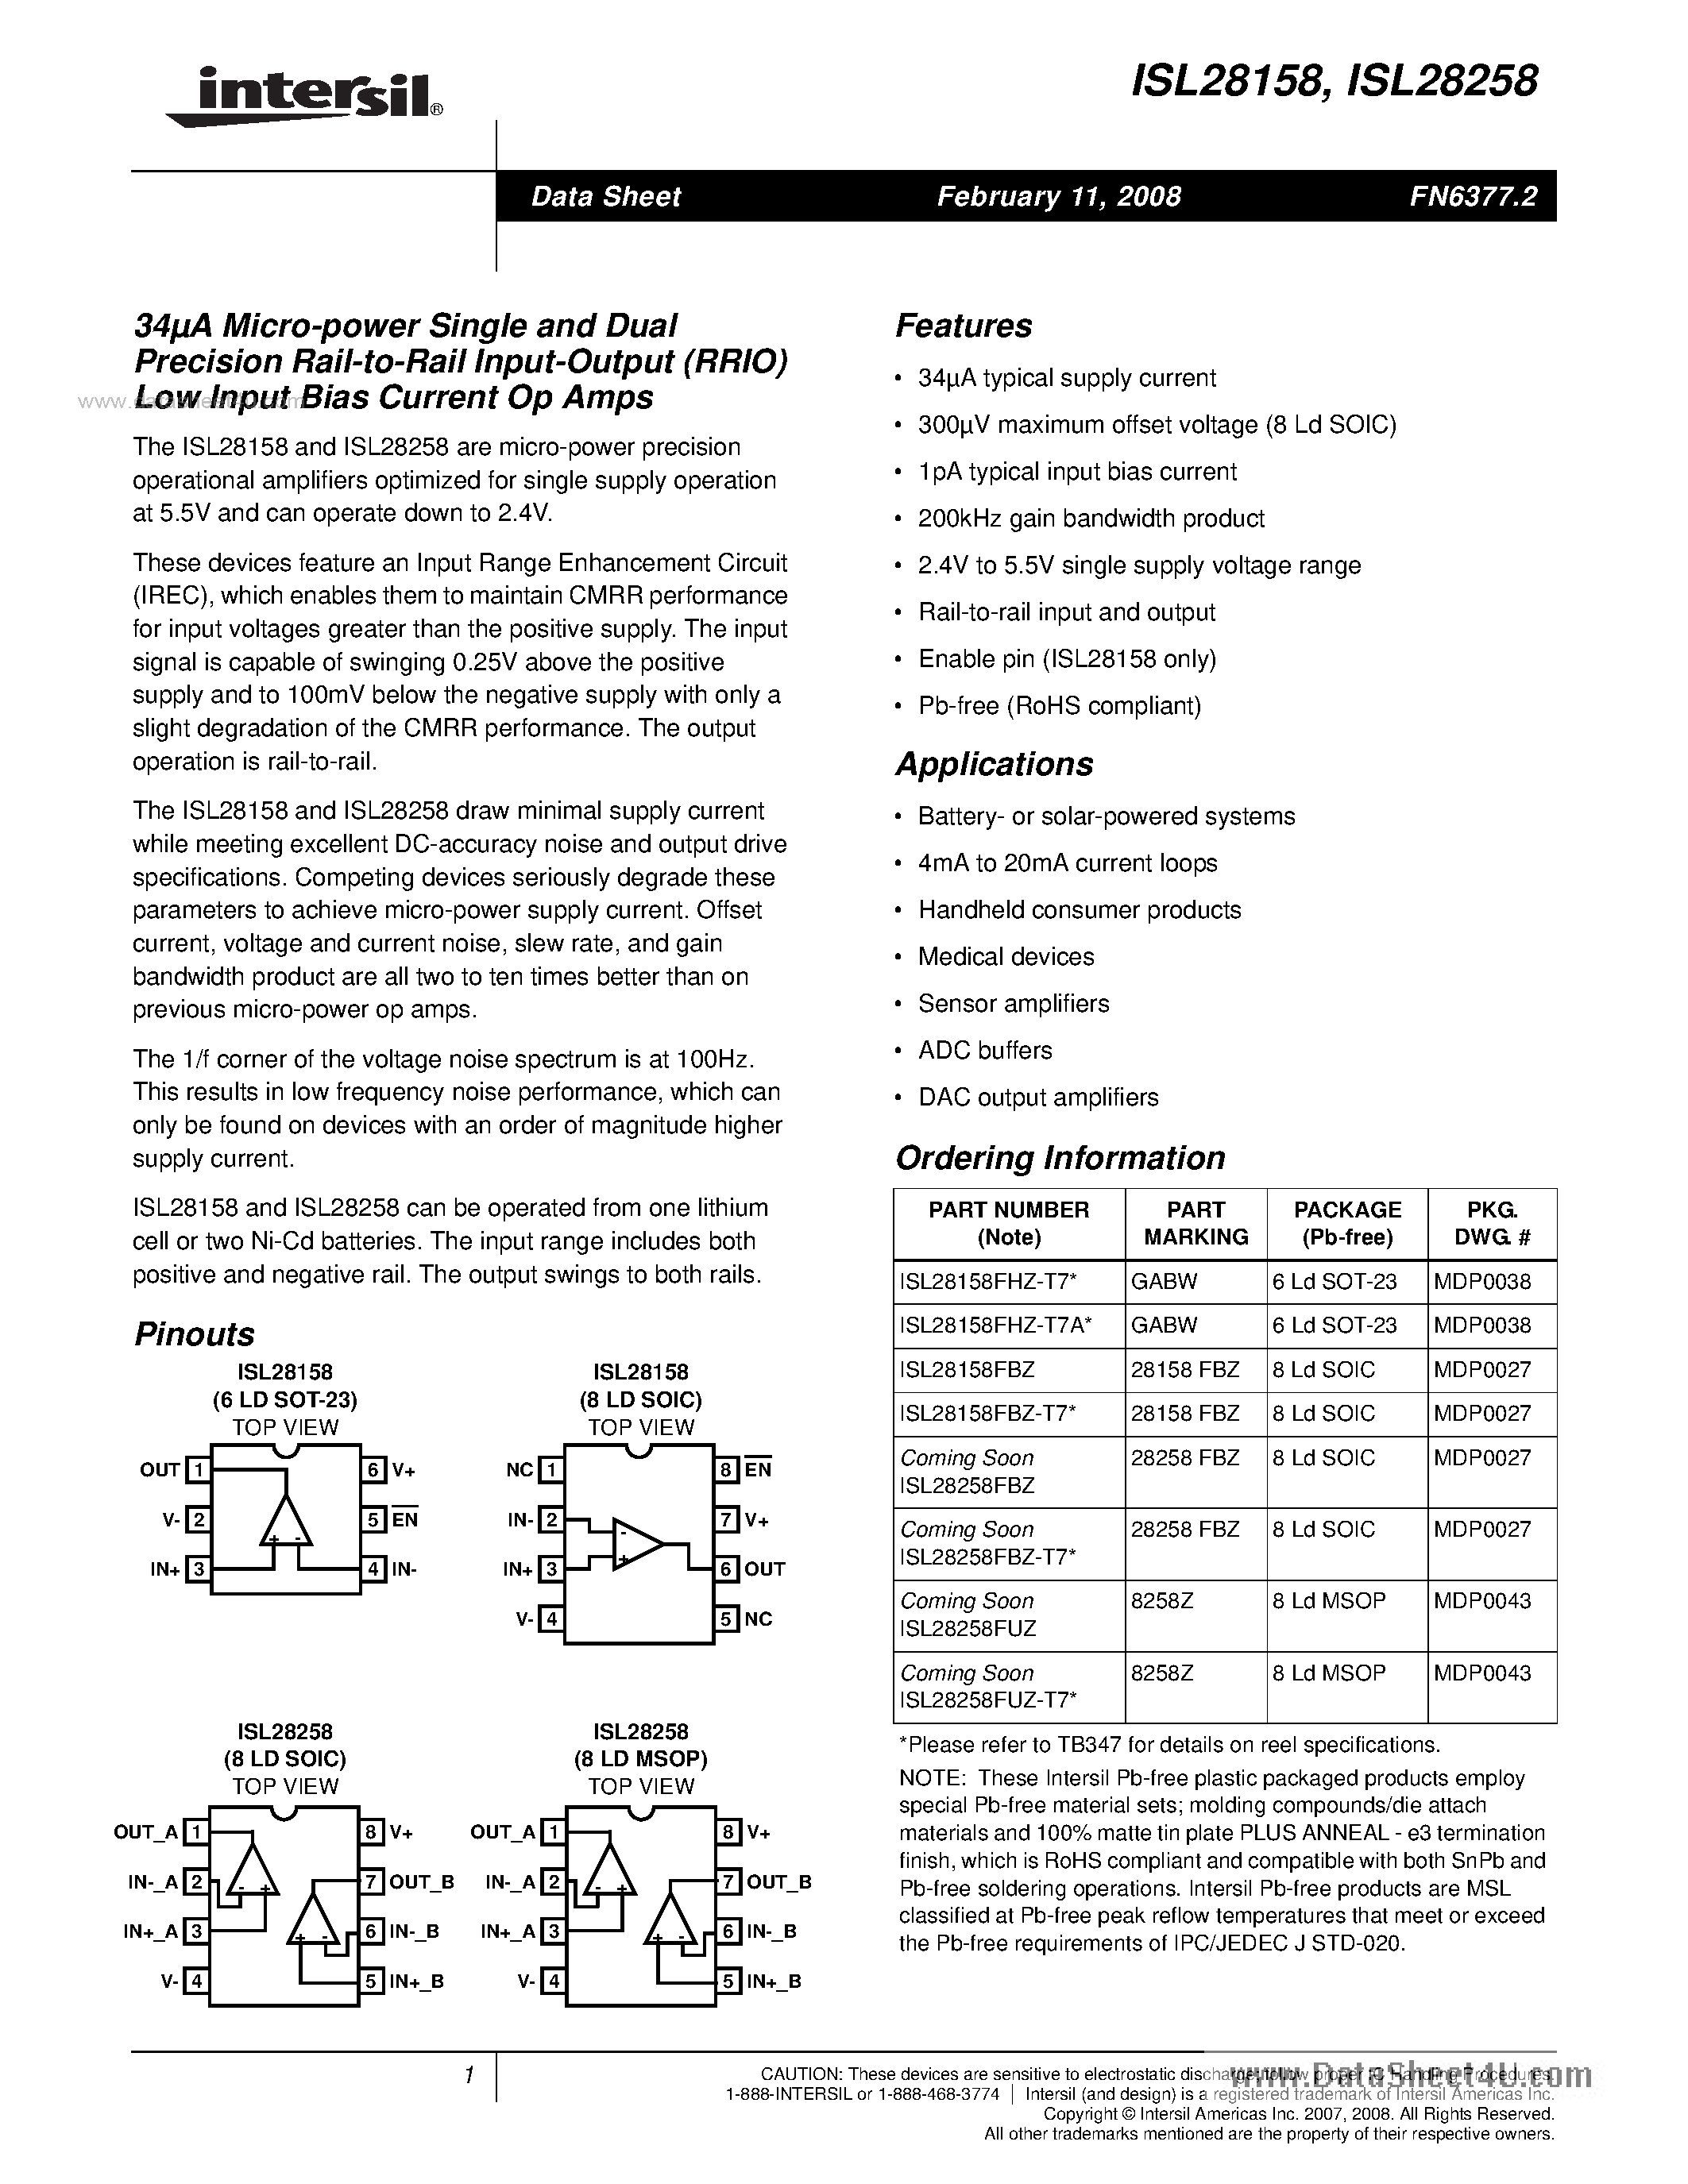 Даташит ISL28258 - (ISL28158 / ISL28258) Micro-power Single and Dual Precision Rail-to-Rail Input-Output (RRIO) Low Input Bias Current Op Amps страница 1